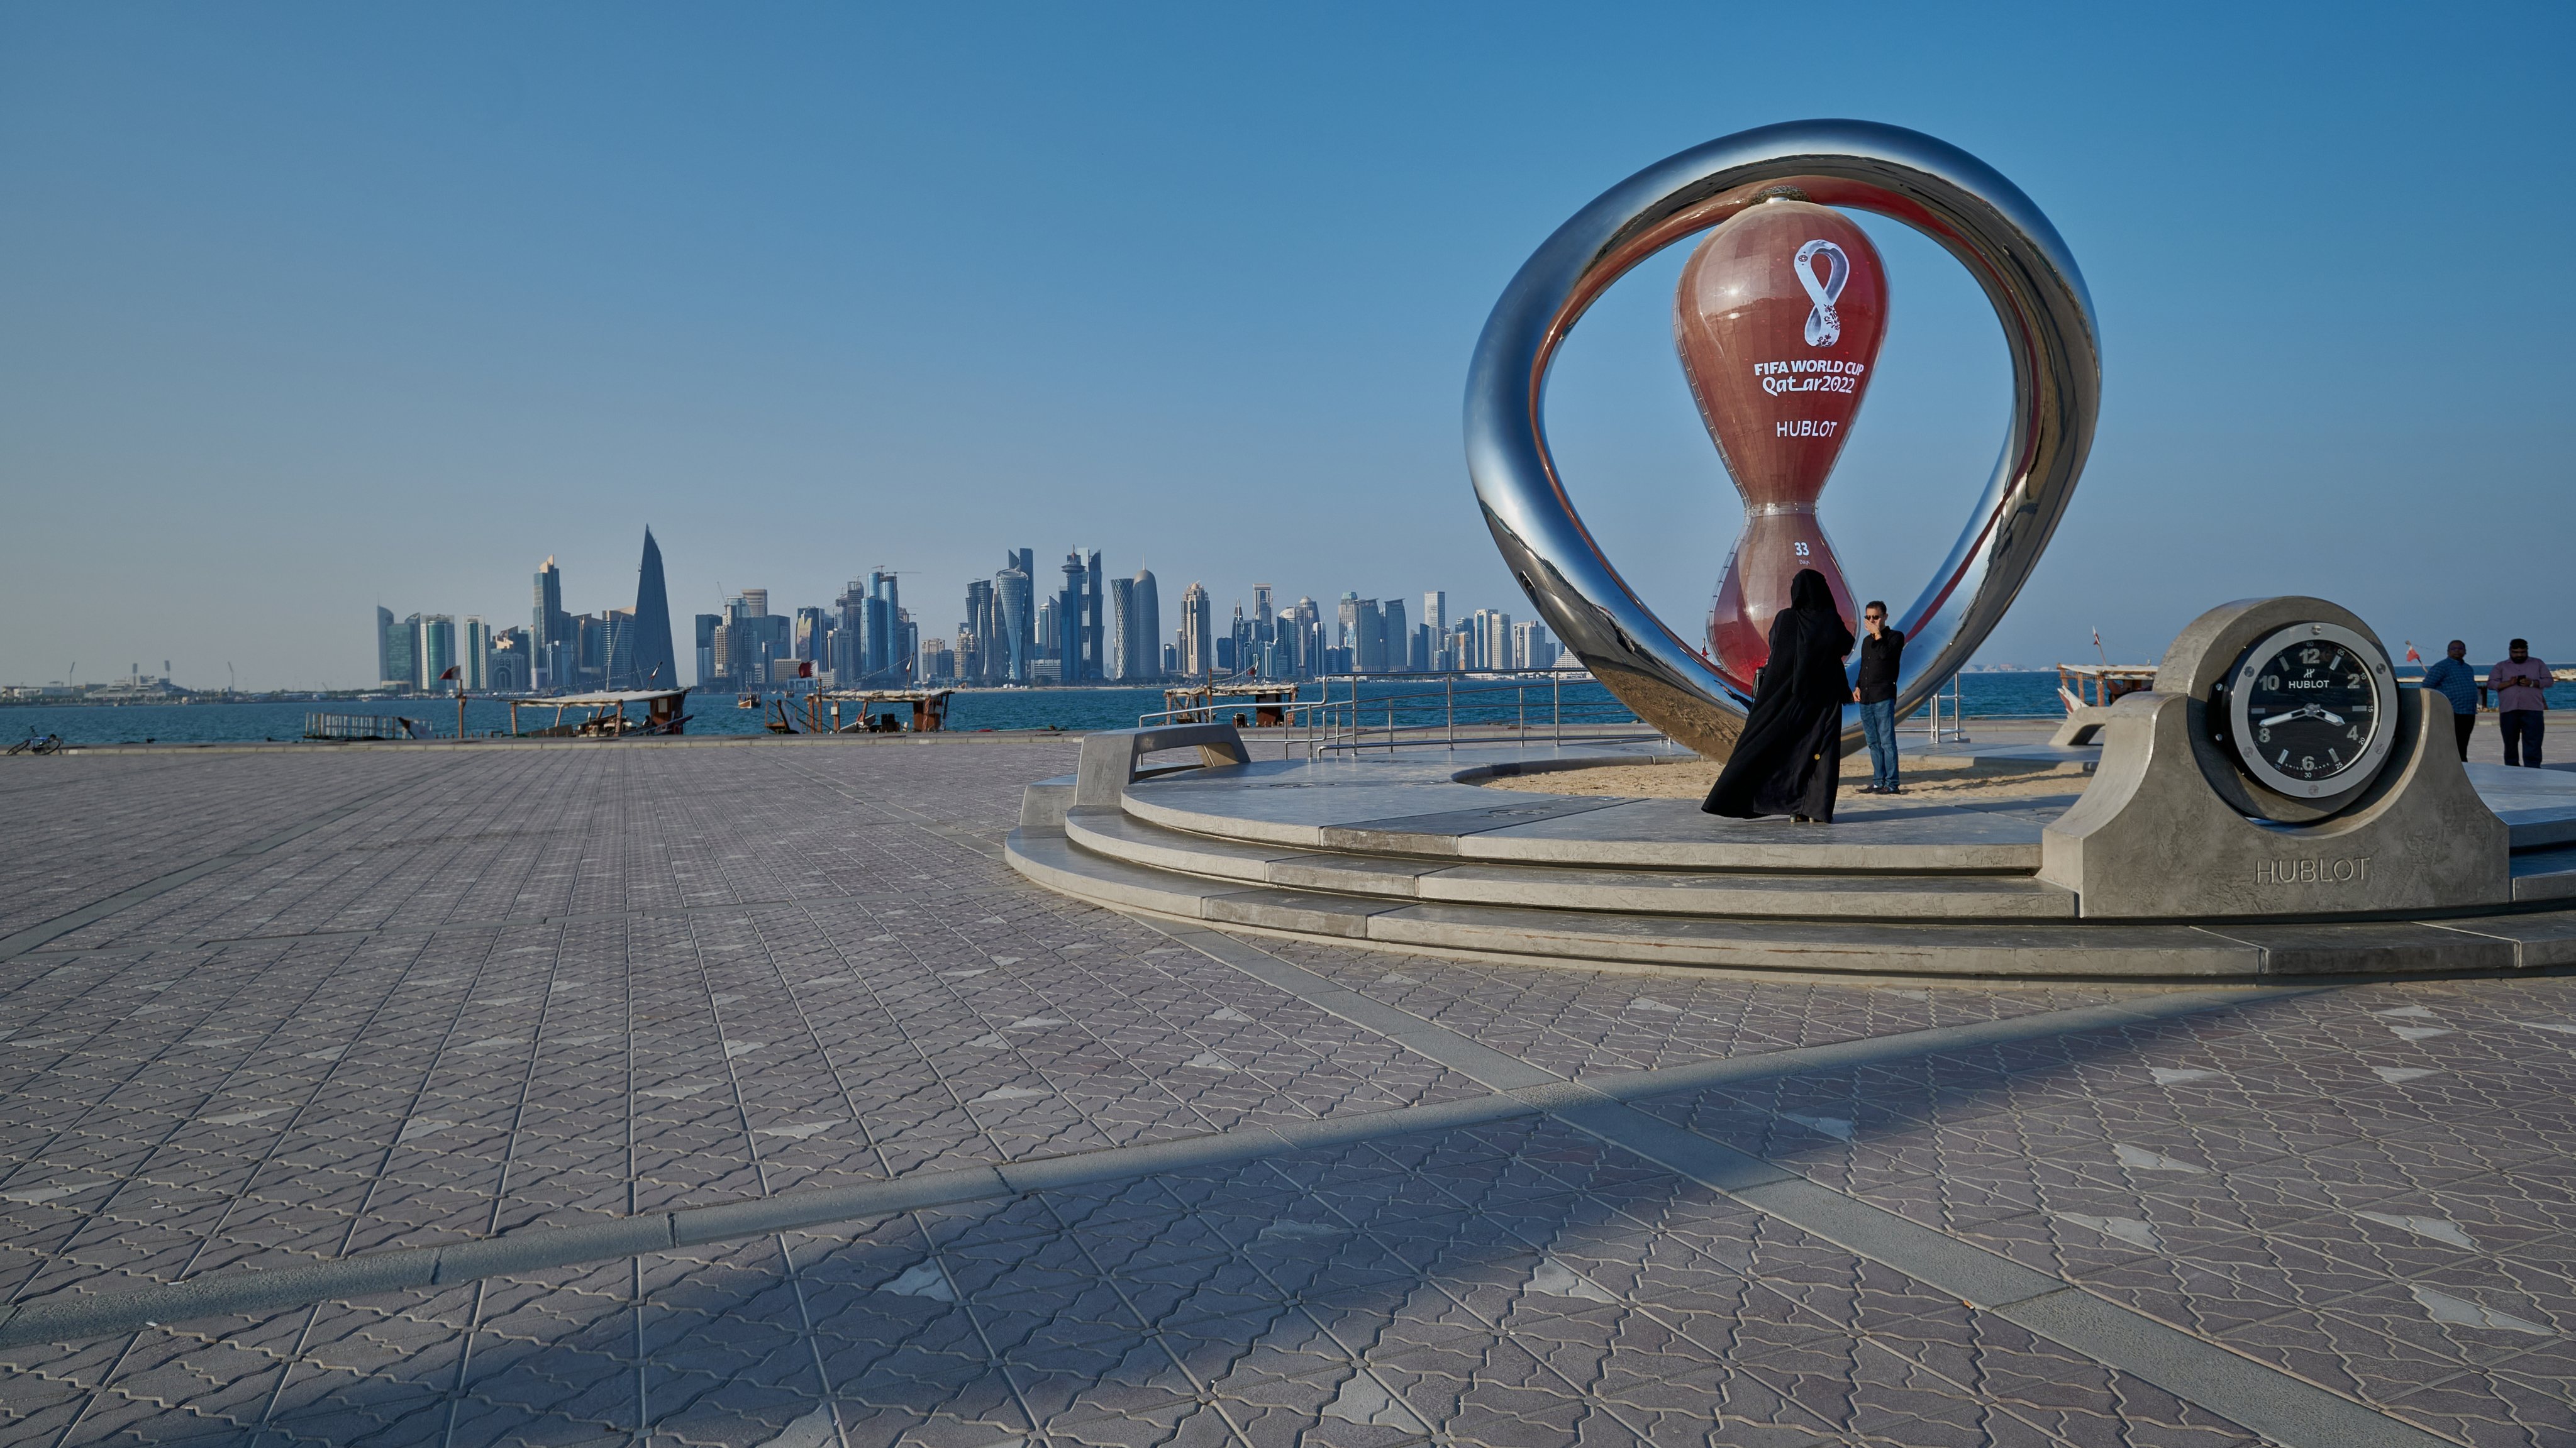 The FIFA World Cup Qatar 2022 Official Countdown Clock